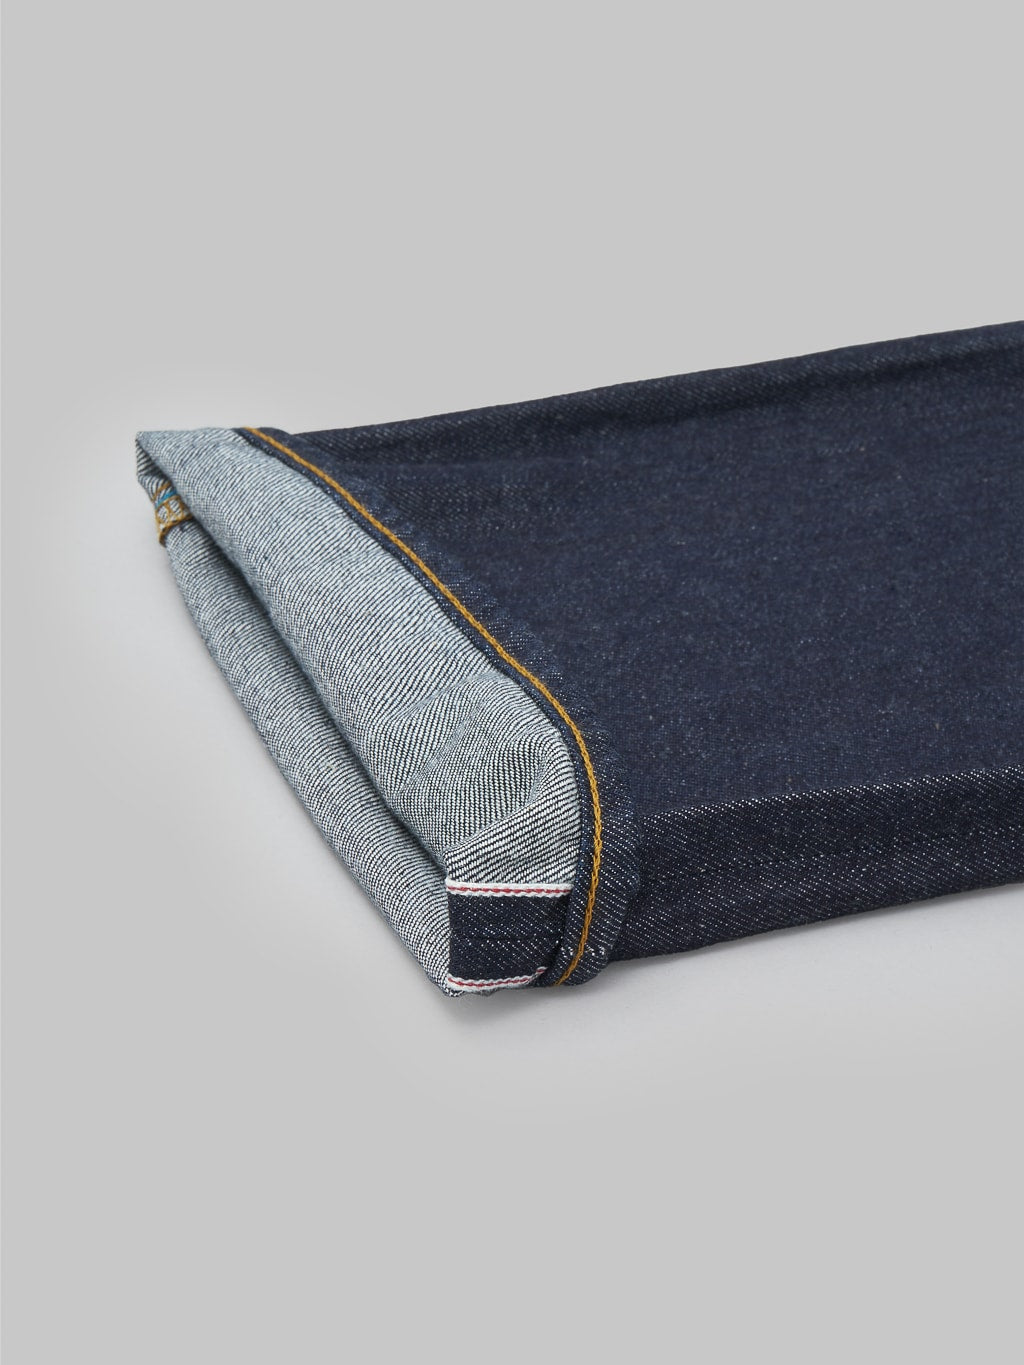 Japan Blue J508 lightweight selvedge denim loose Jeans selvedge closeup